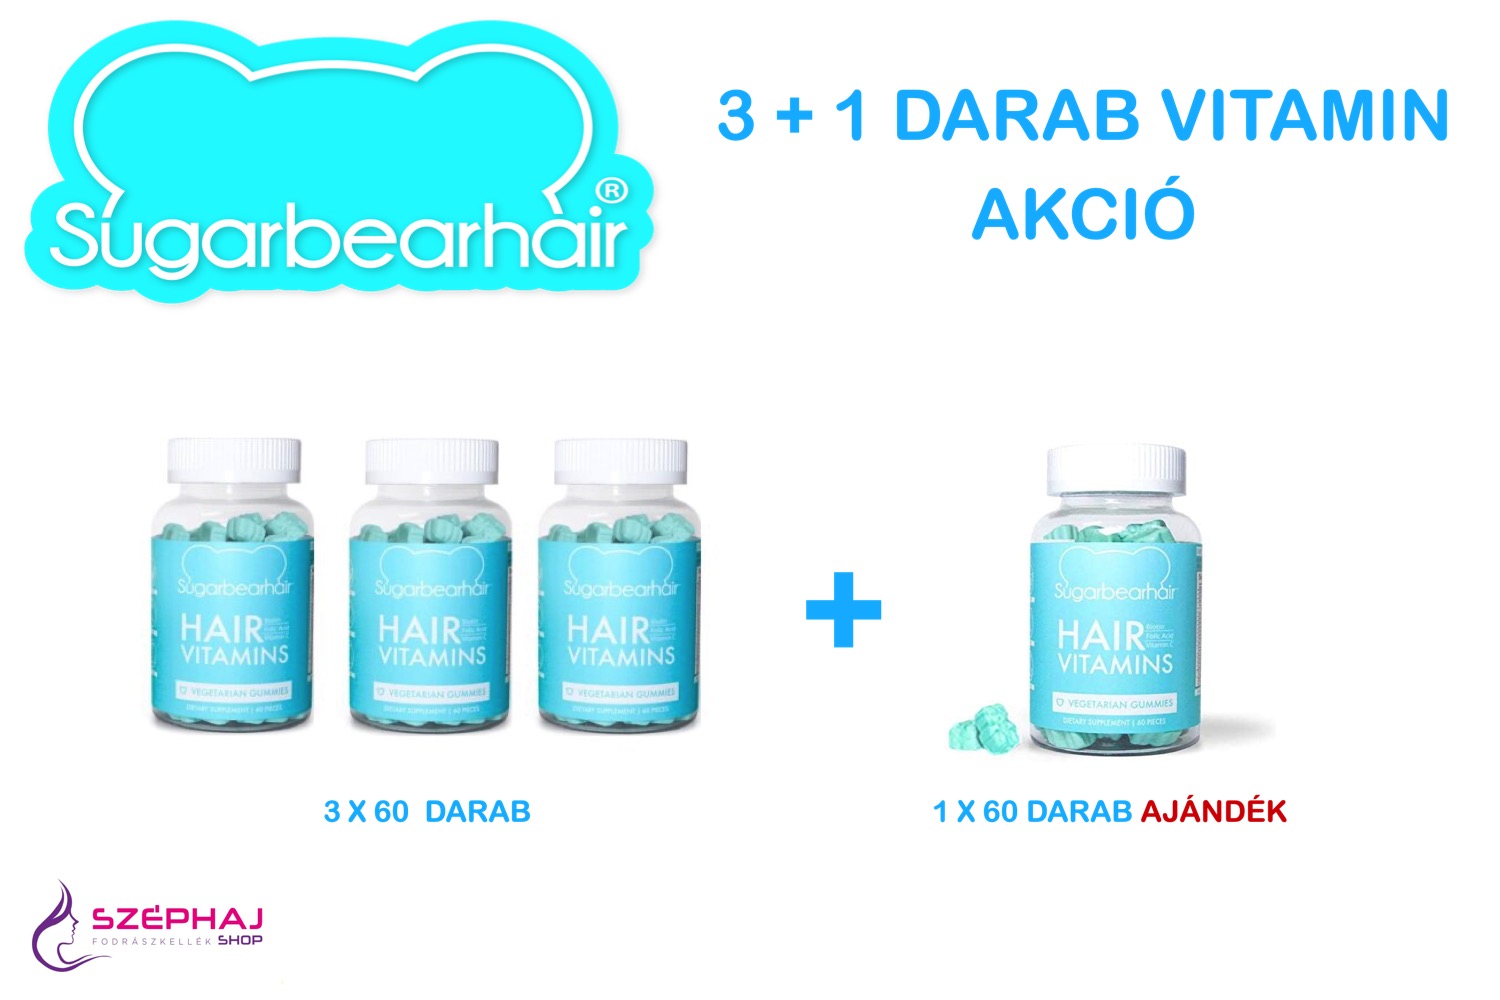 SUGARBEARHAIR Hair Vitamins 3+1 darab AKCIÓ (4x60 db)